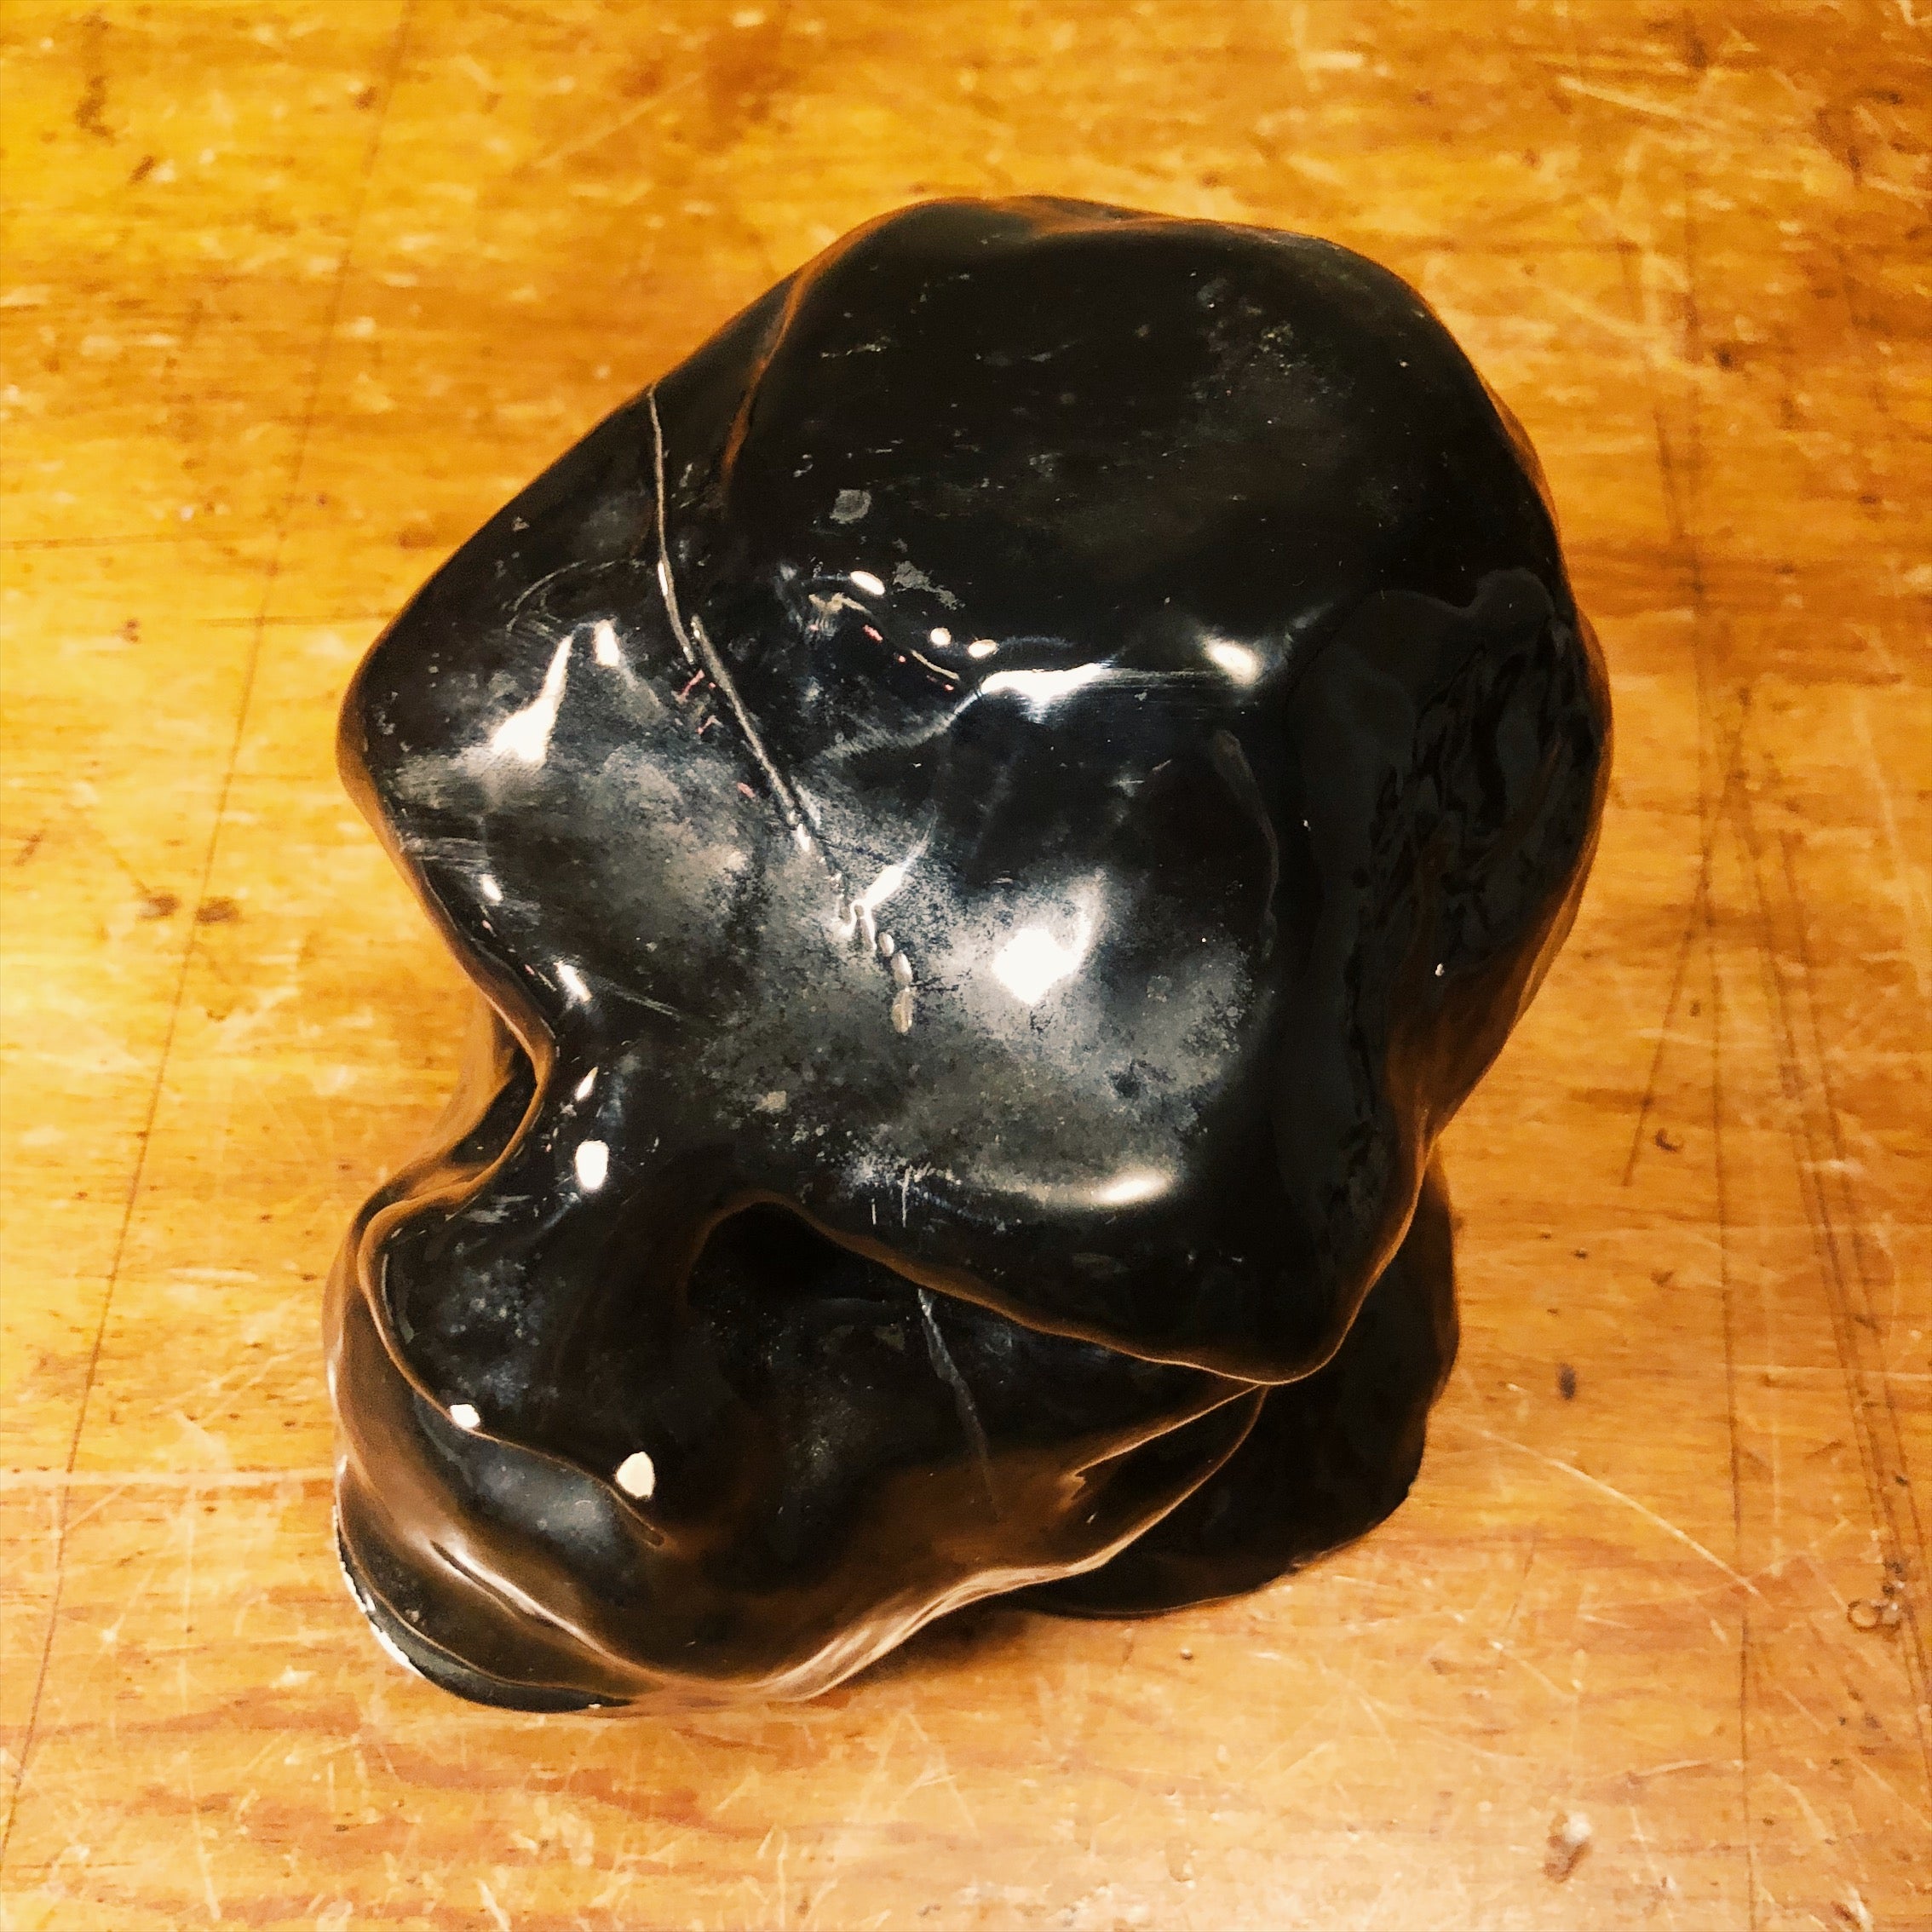 Vintage Gorilla Head Sculpture - Top Left Head